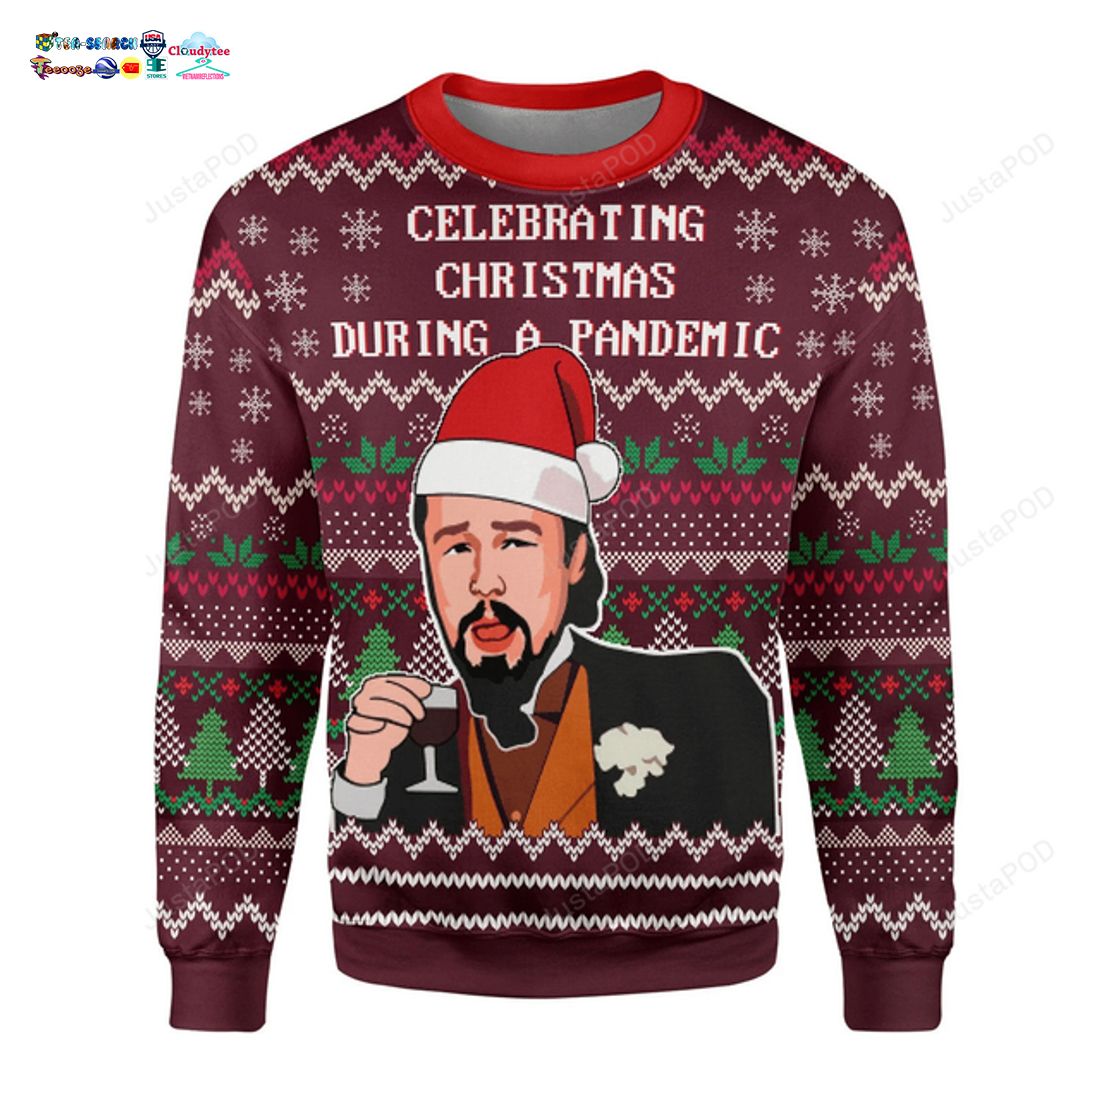 Leonardo DiCaprio Celebrating Christmas During A Pandemic Ugly Christmas Sweater